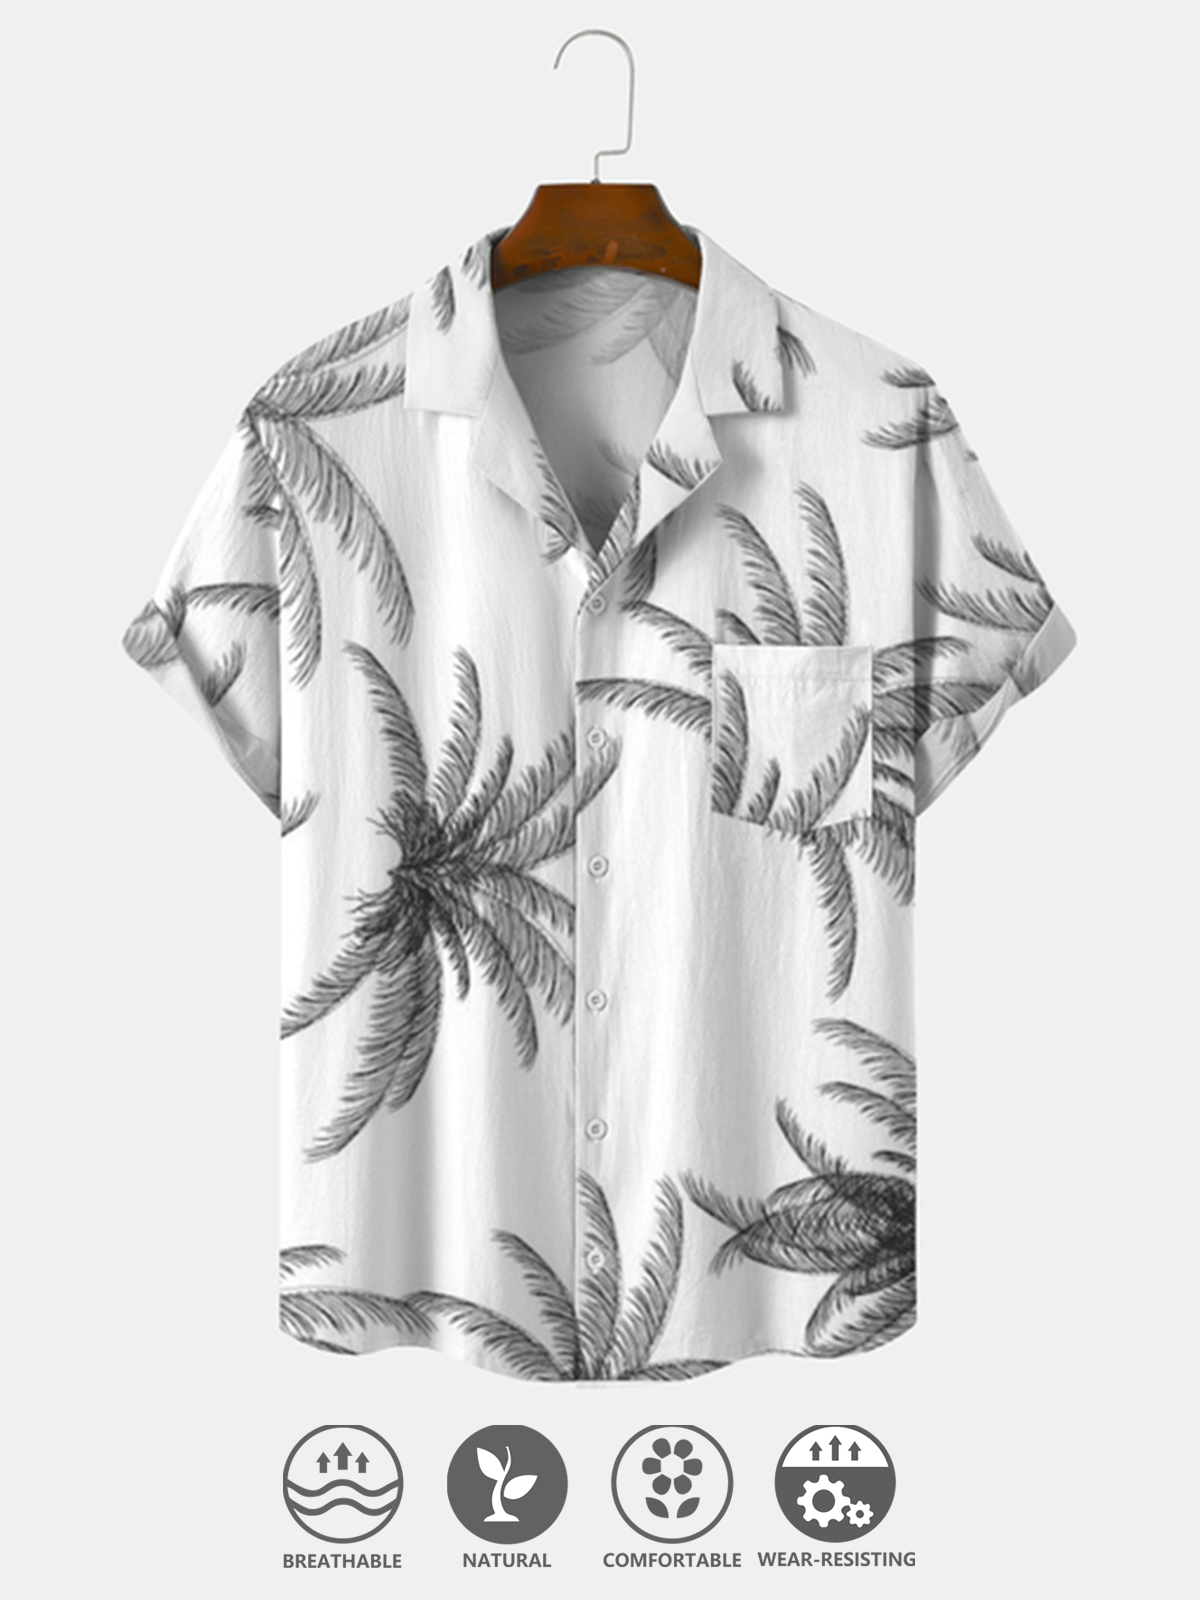 Cotton Linen Style American Botanical Floral Coconut Tree Print Linen Shirt